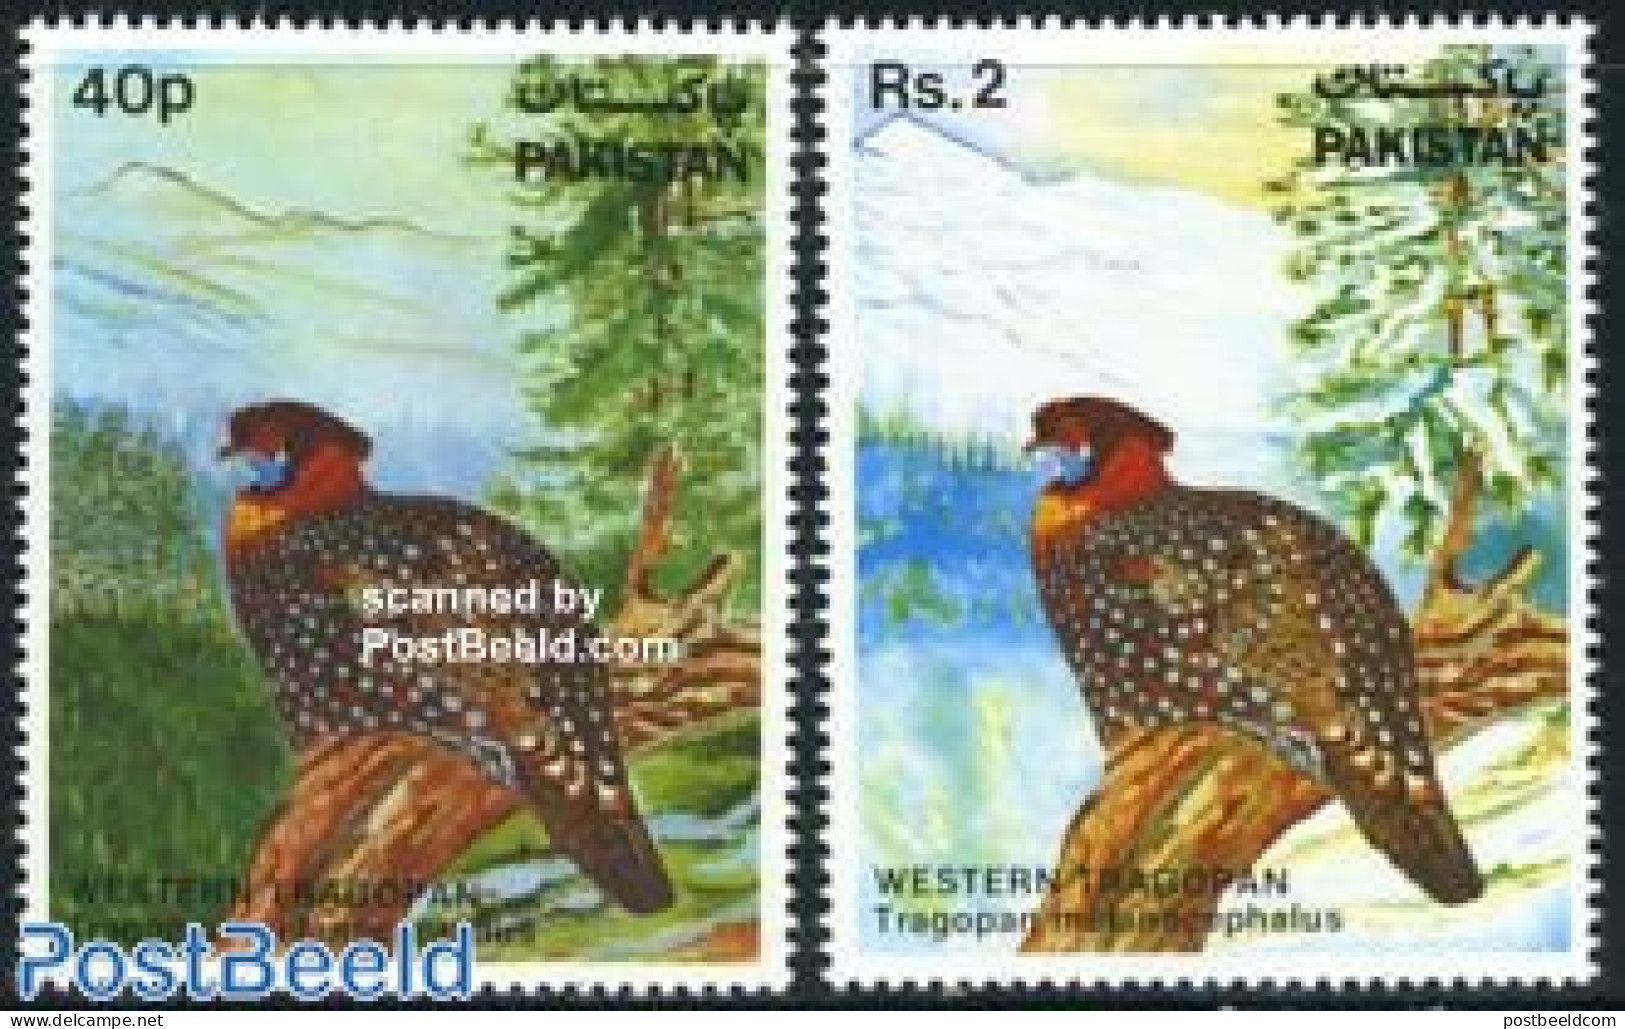 Pakistan 1981 Birds 2v, Mint NH, Nature - Birds - Pakistan